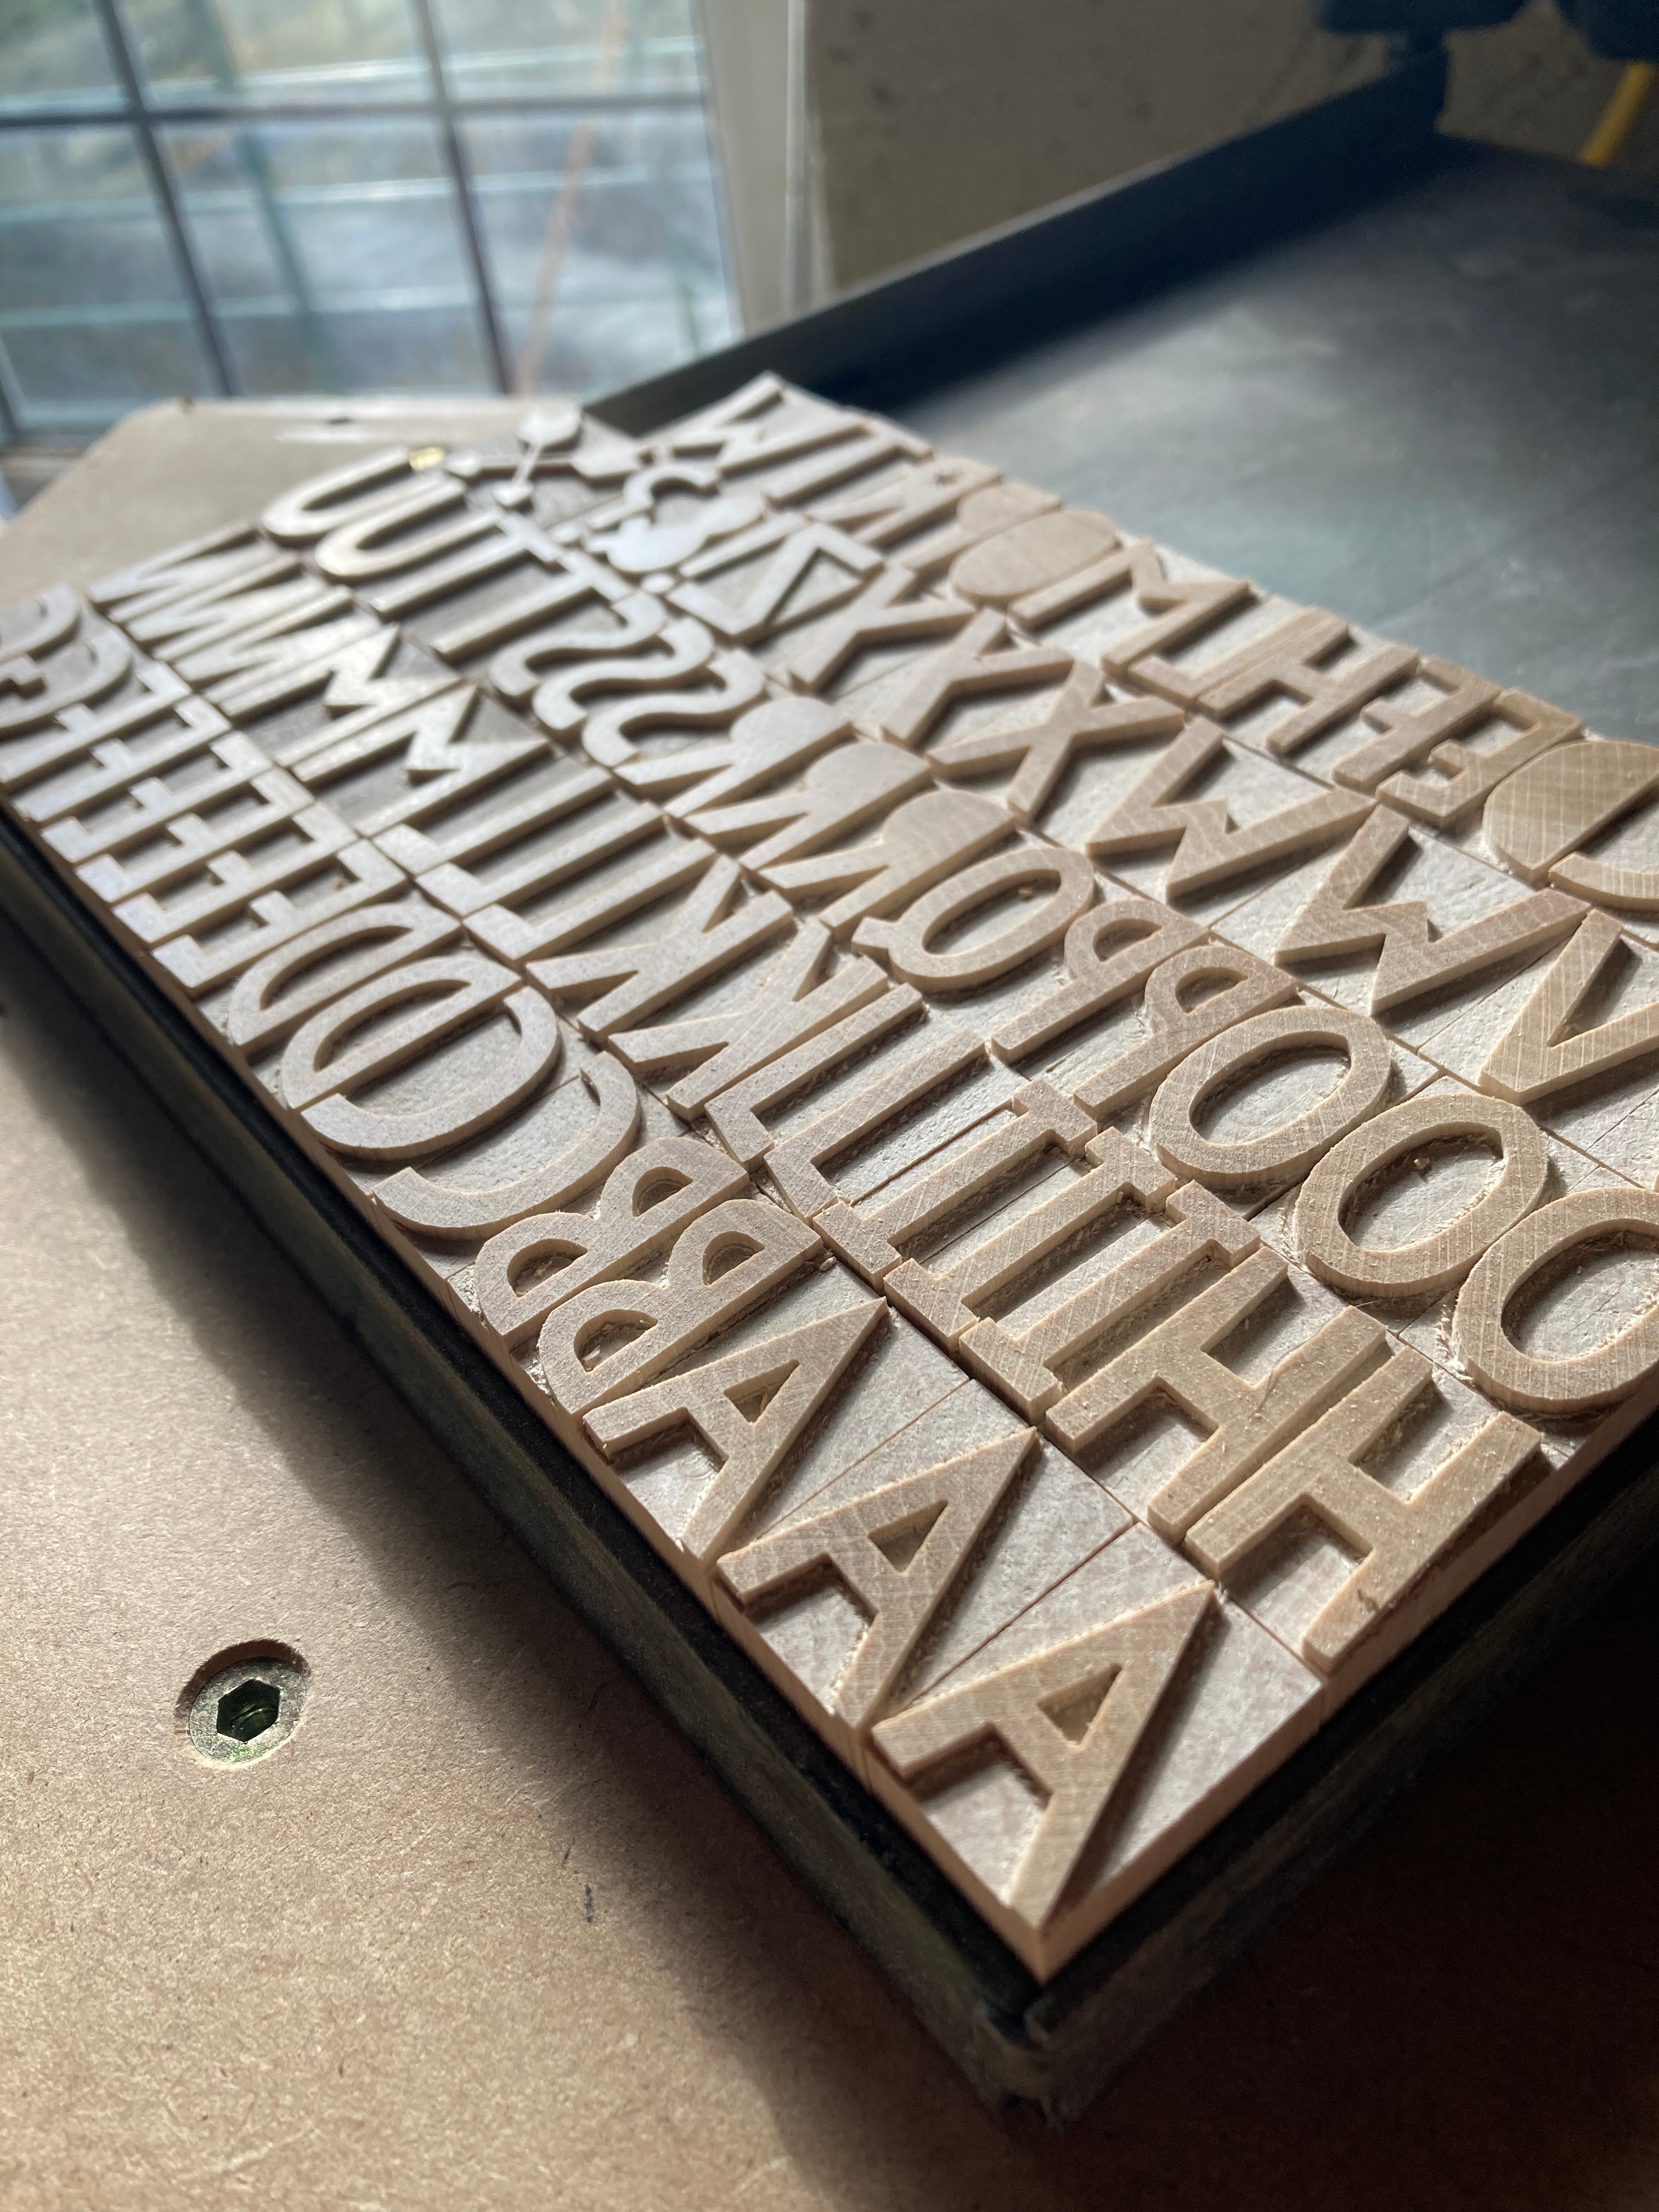 'Papercute' letterpress woodtype typeface